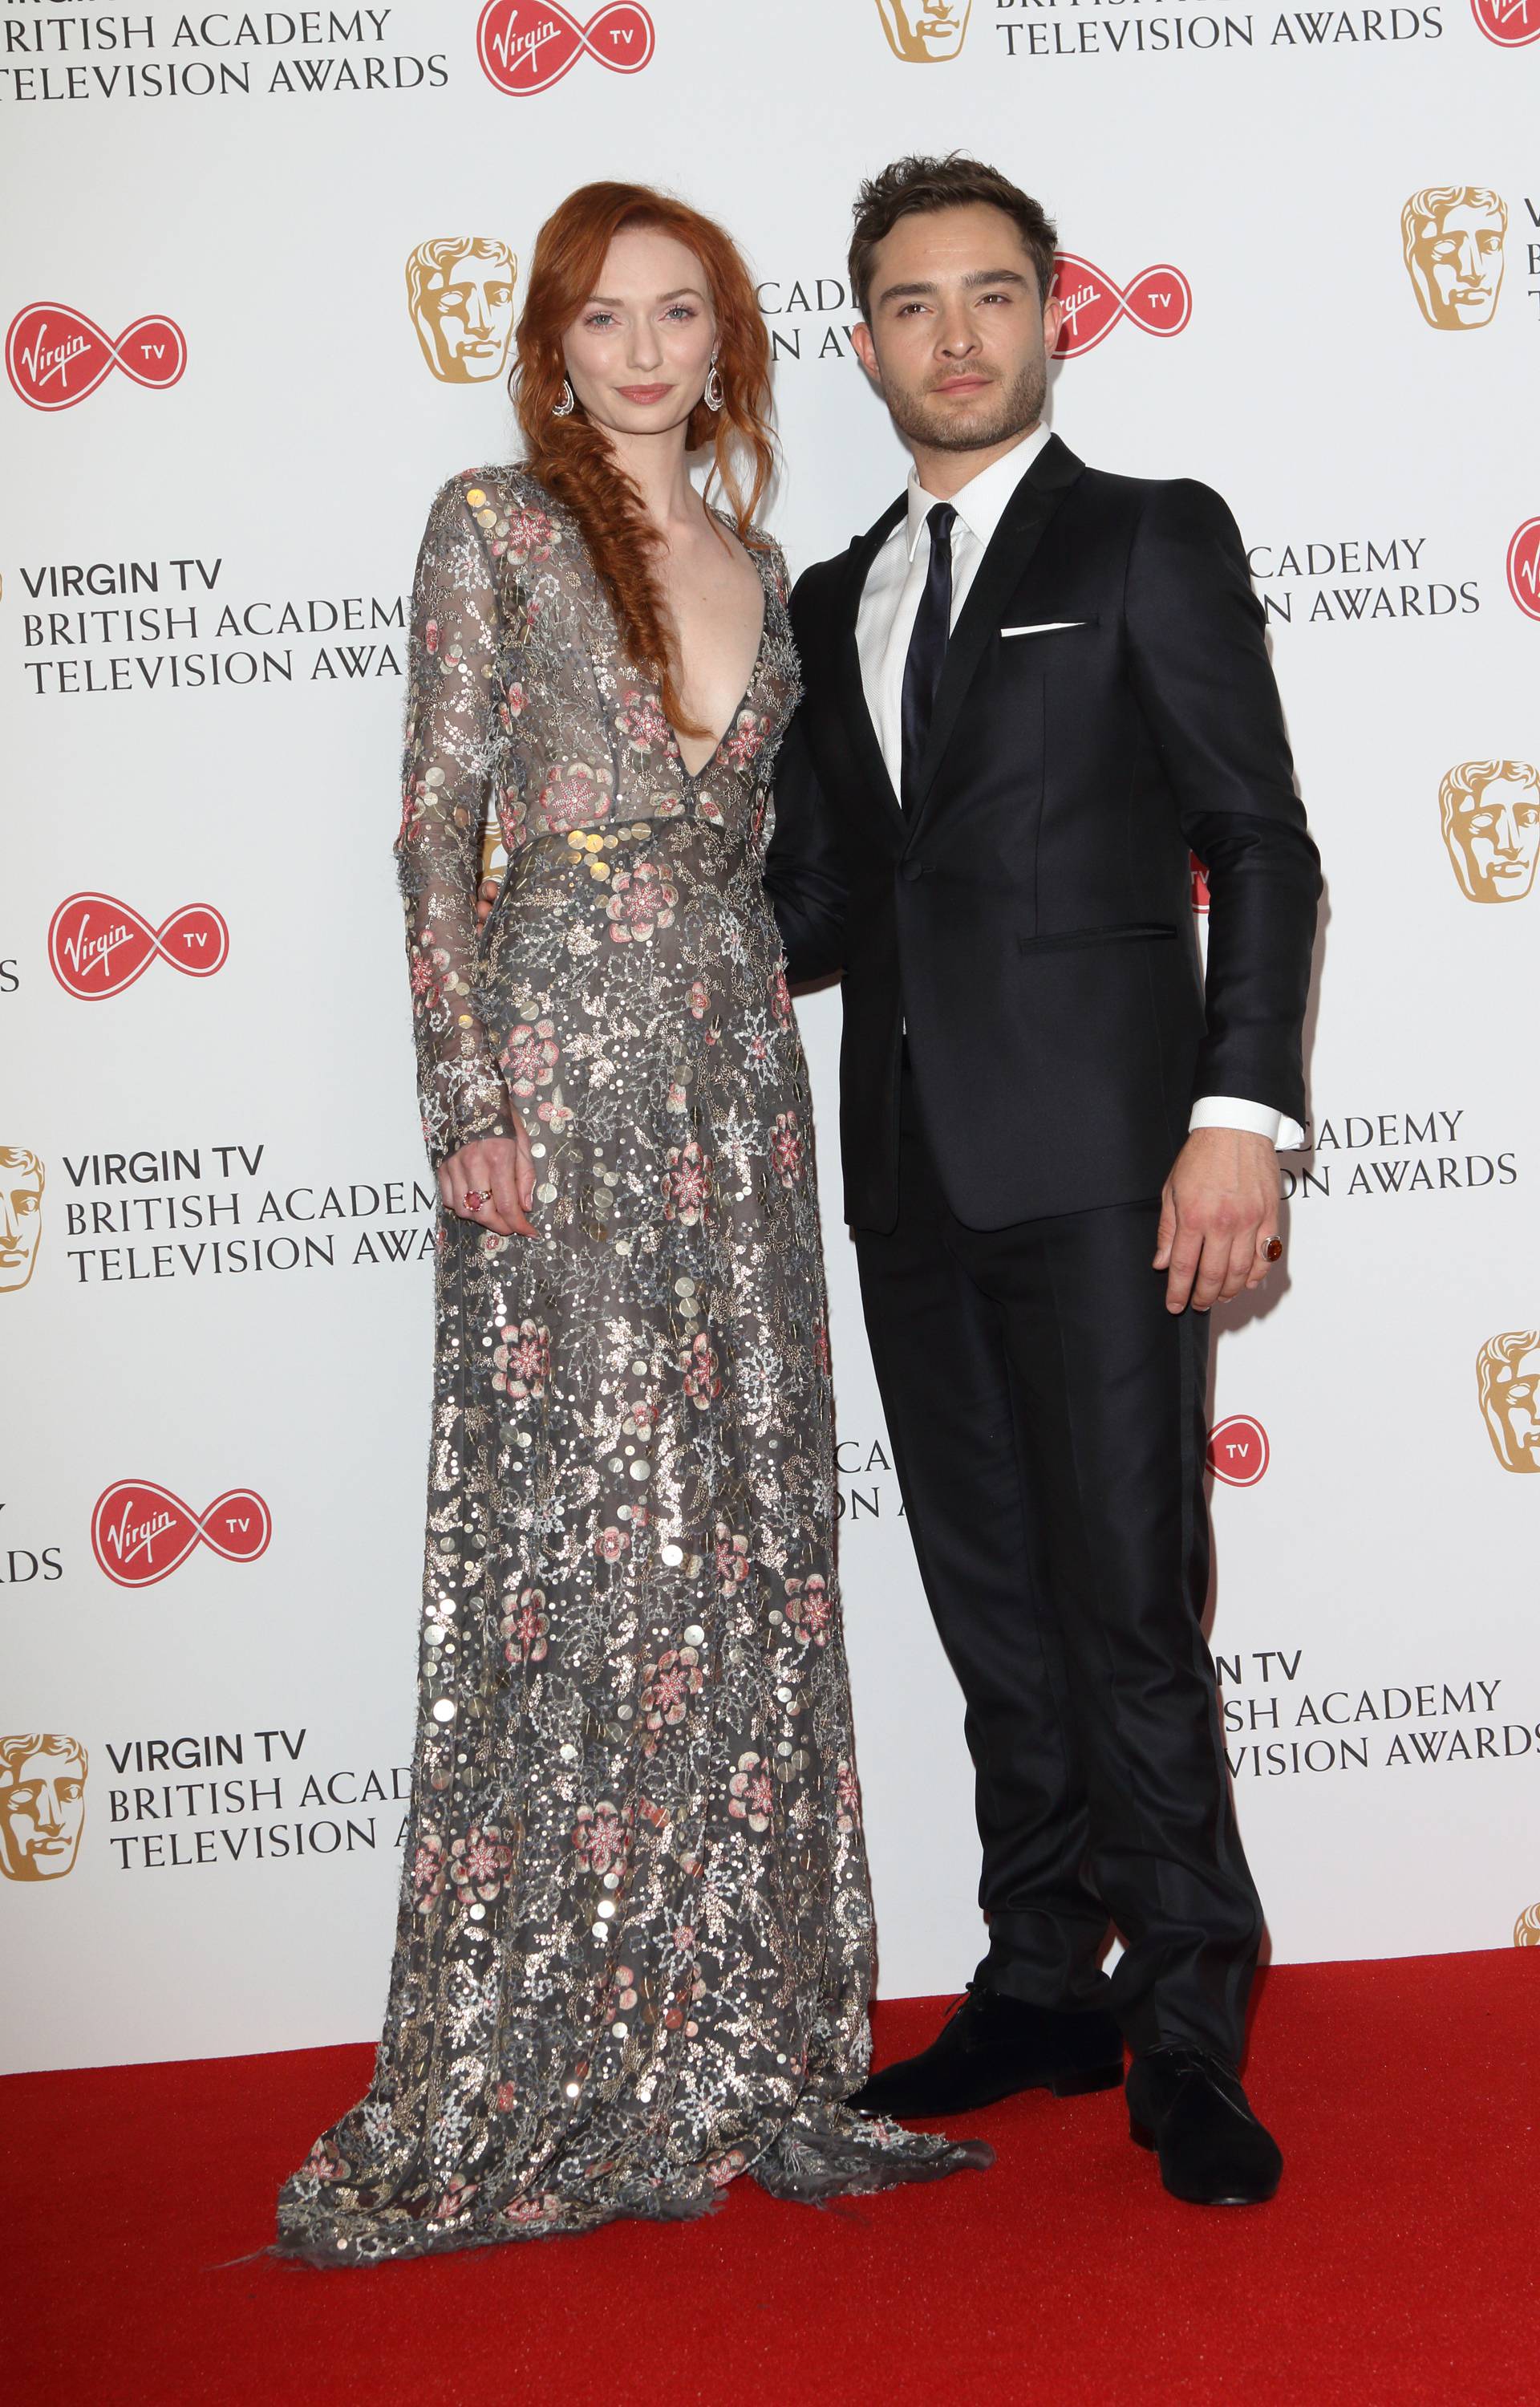 TV British Academy Television Awards 2017 - Winners Room